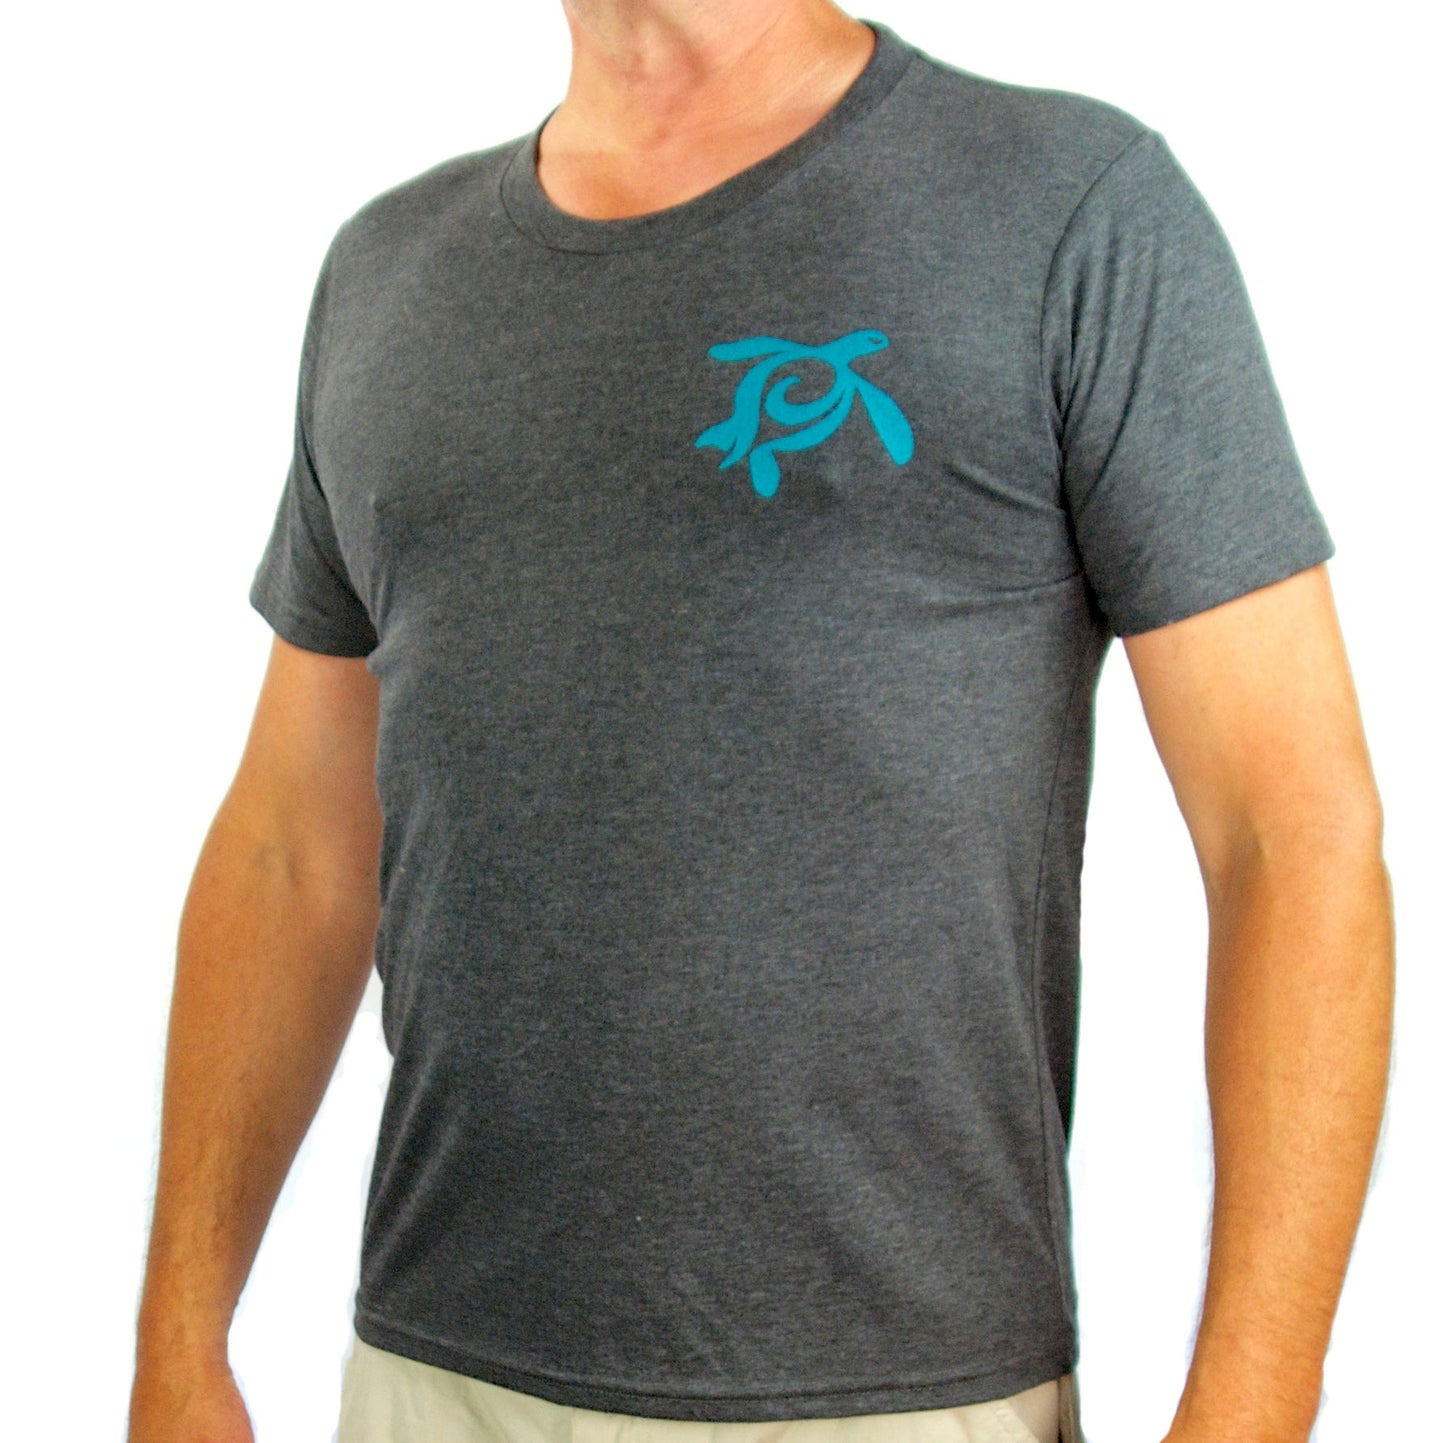 It's an Ocean Thing Men's T-Shirt - The Tool Store